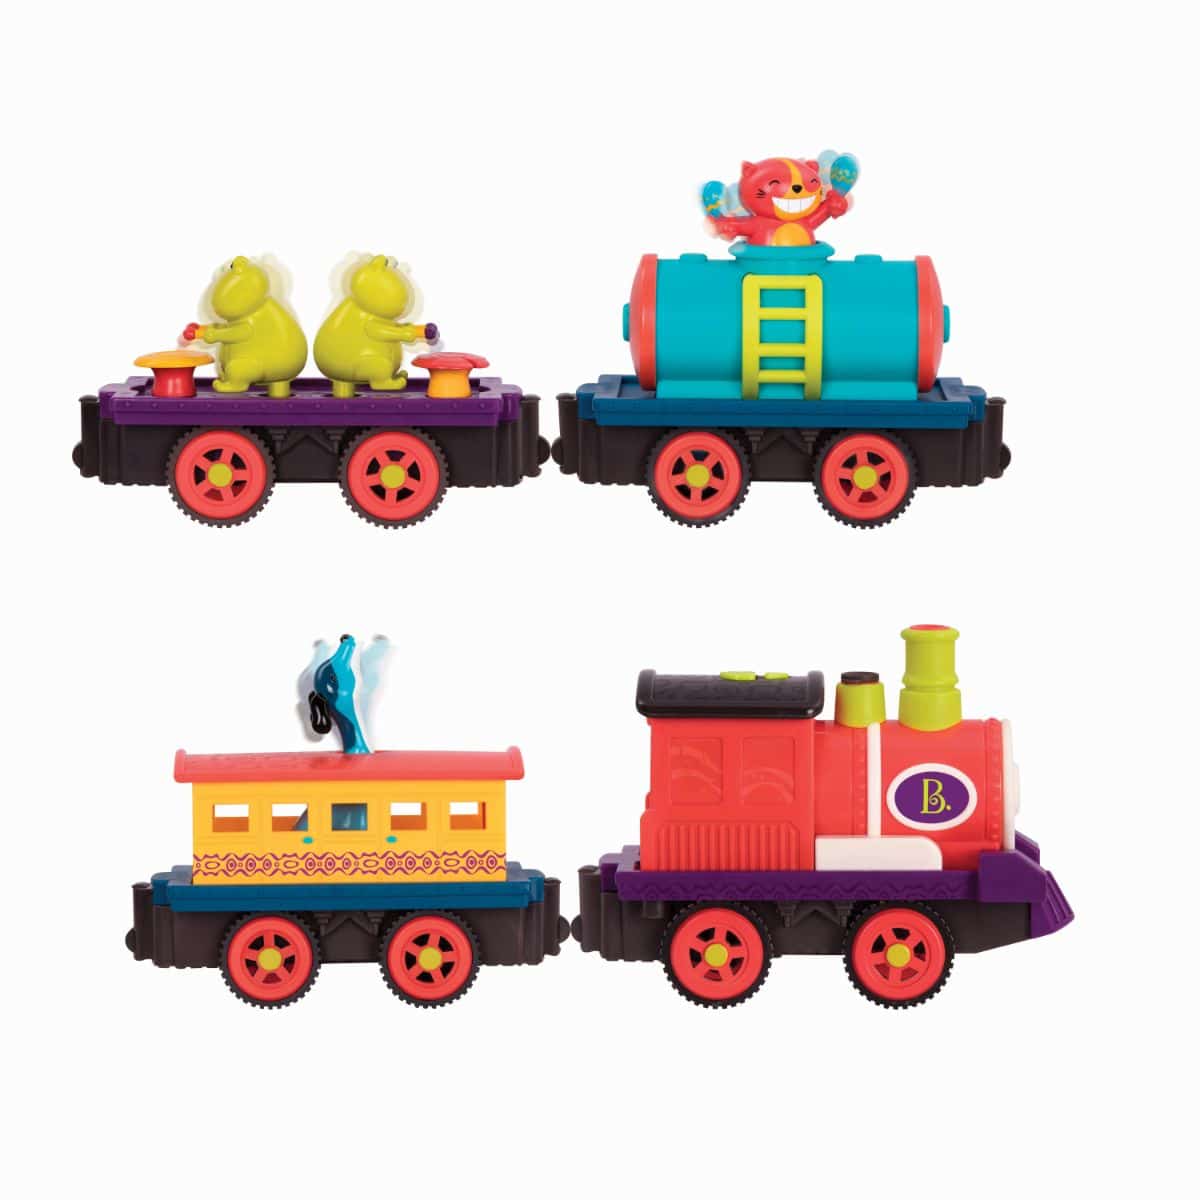 Toy train set.